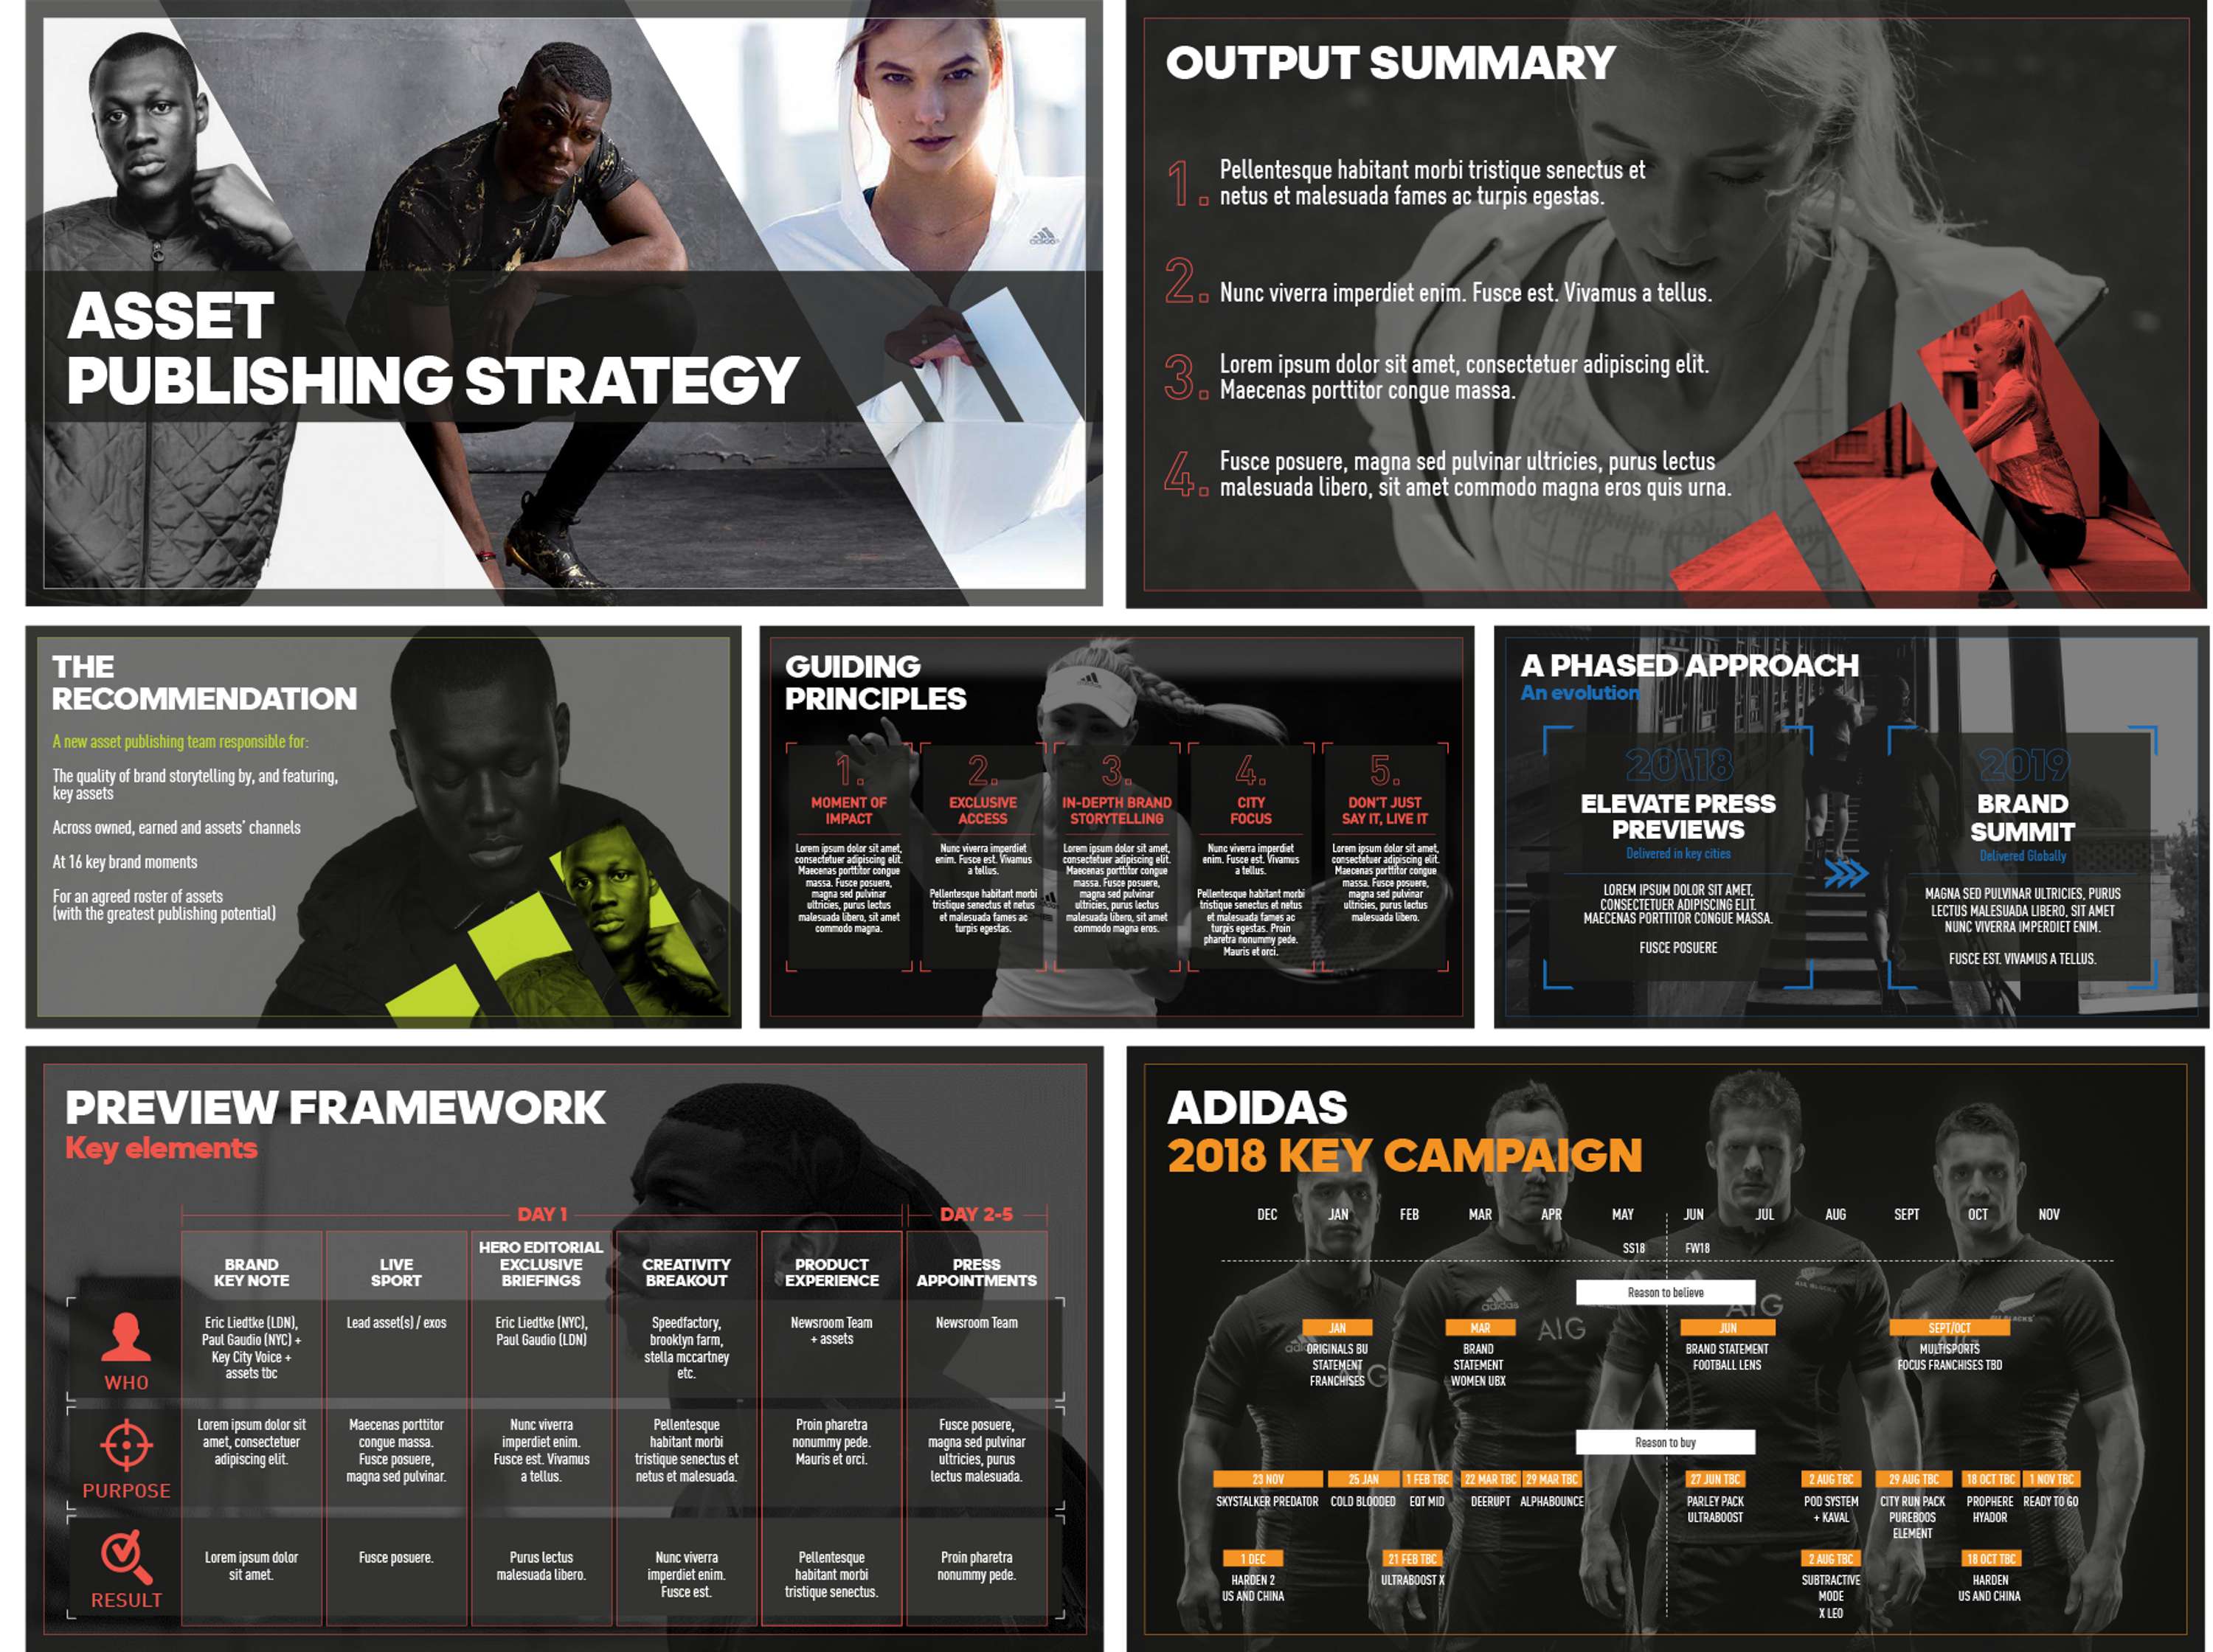 jaloezie Vegen sponsor Adidas PowerPoint presentation | The Dots